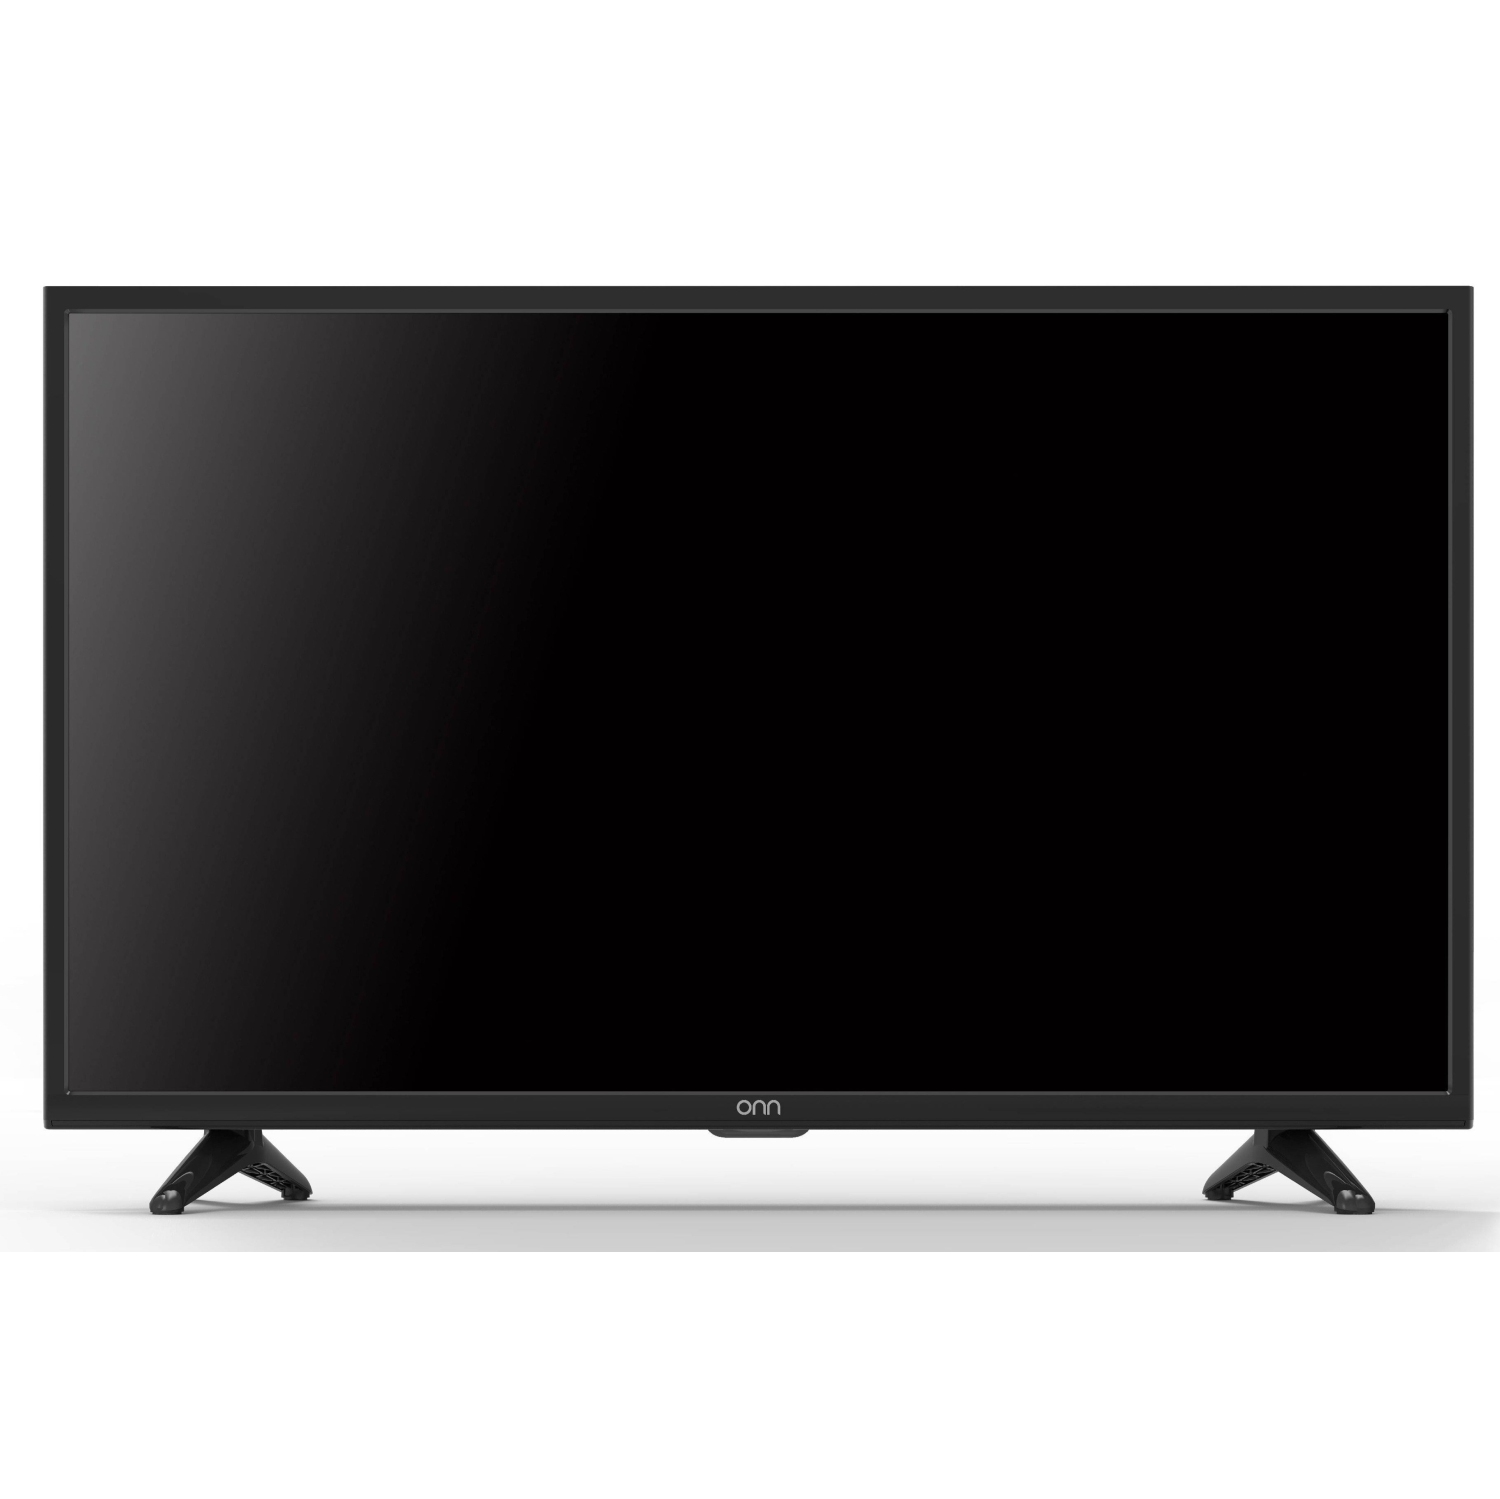 Refurbished (Good) - ONN 32" Class HD (720P) LED TV (ONC32HB18C03)